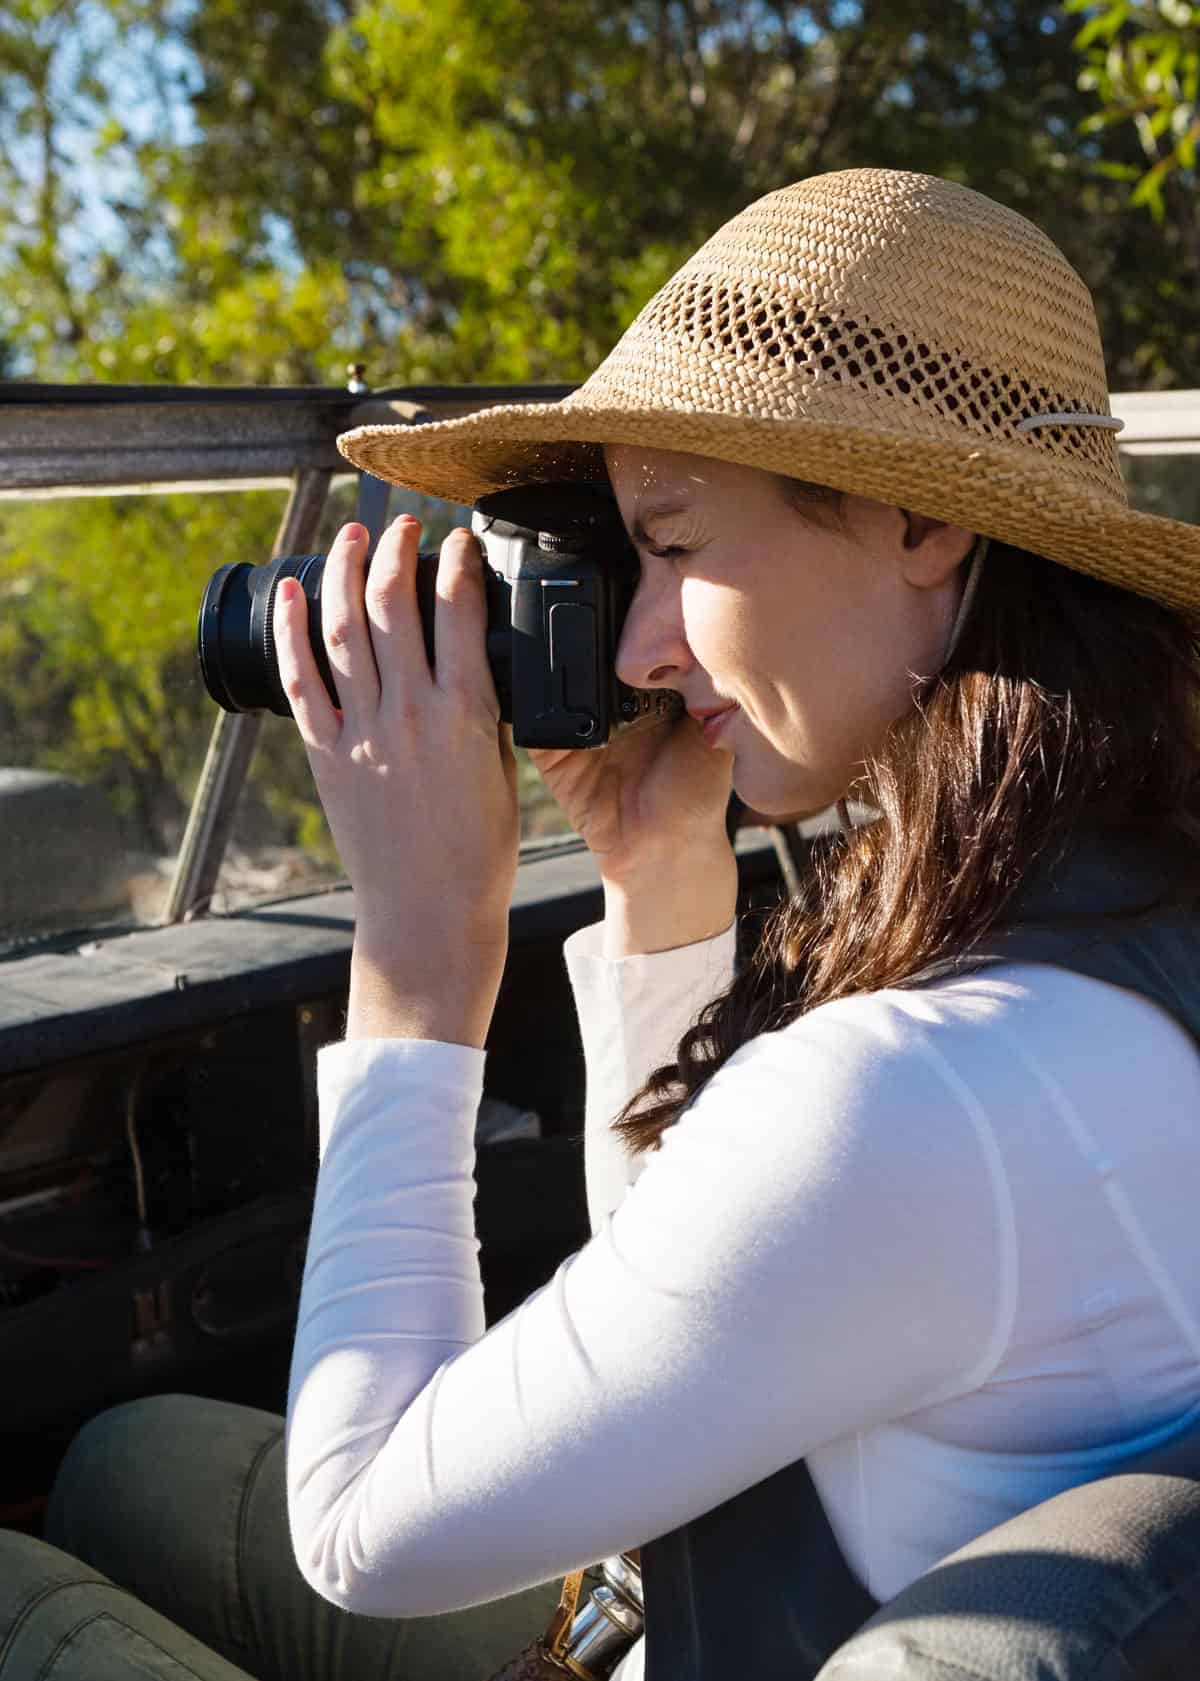 Best camera for safari in Africa